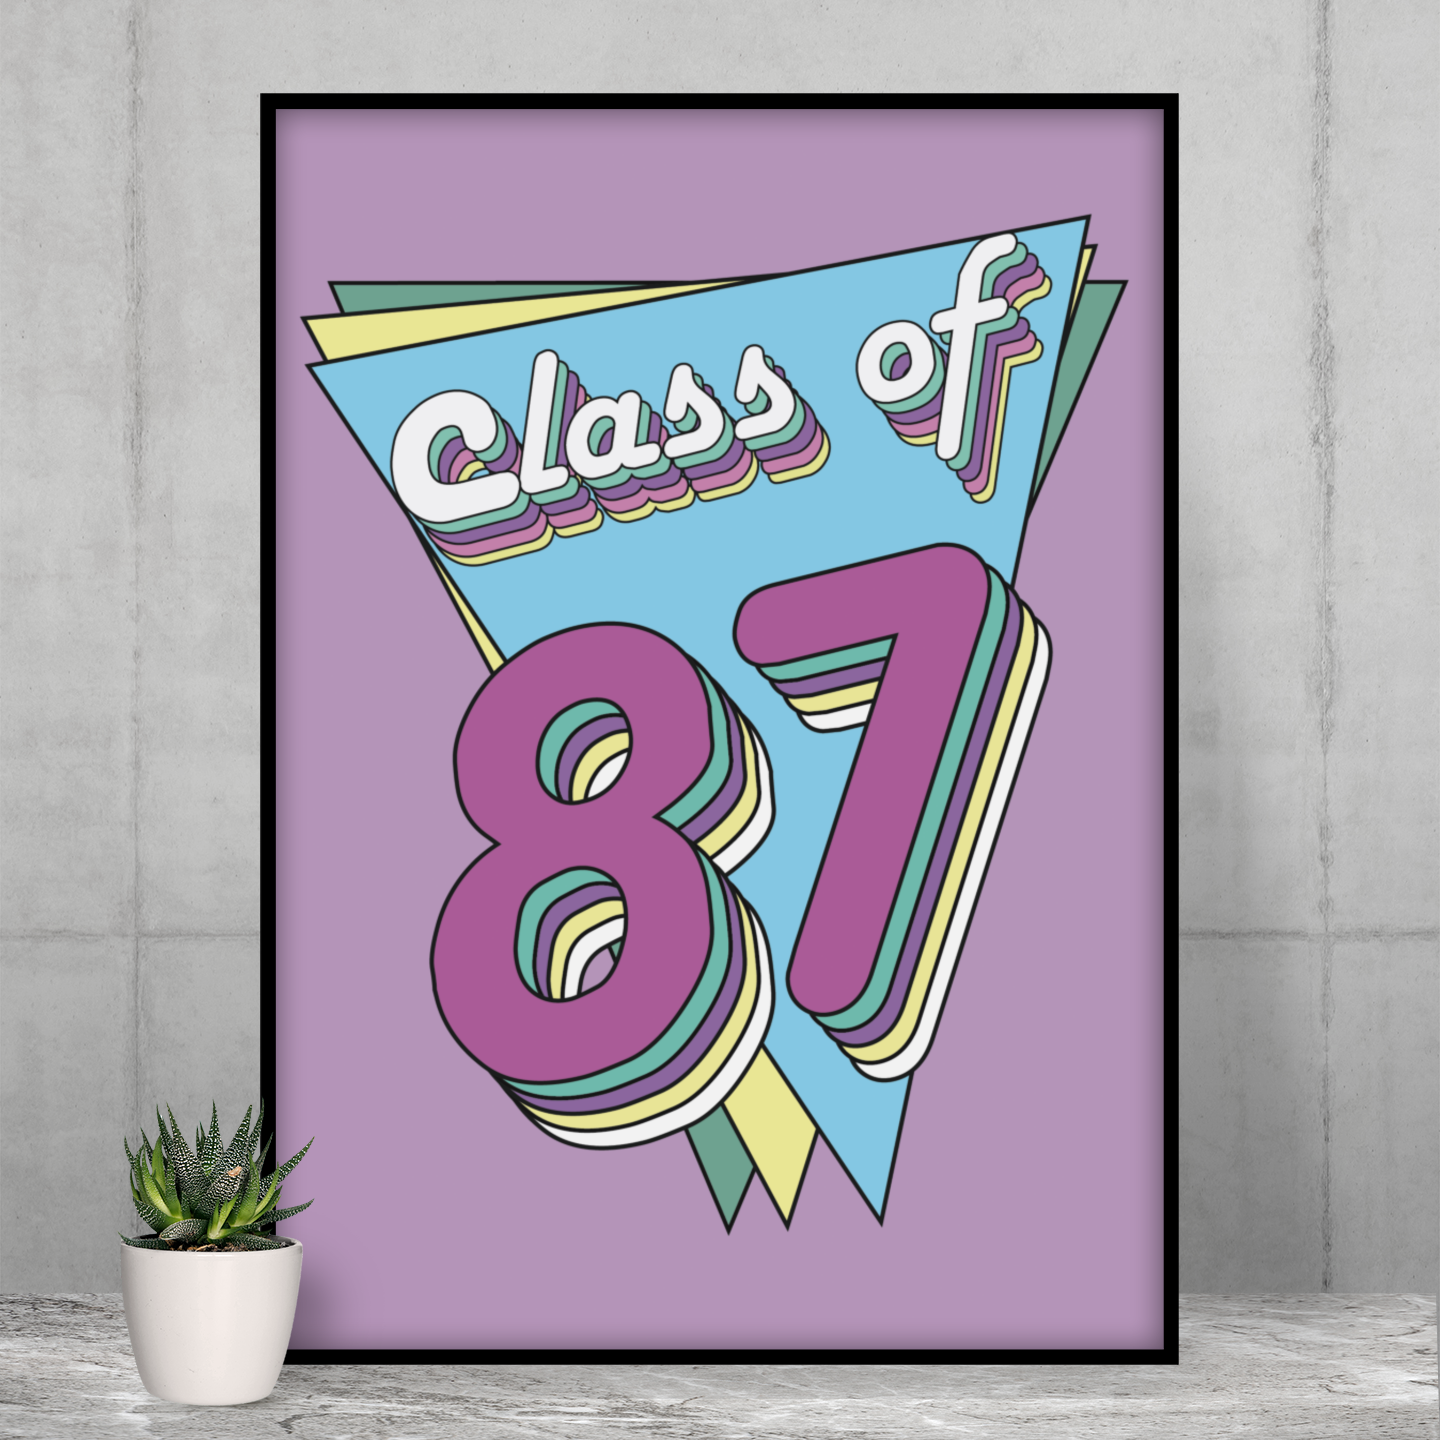 class of 87 frame print